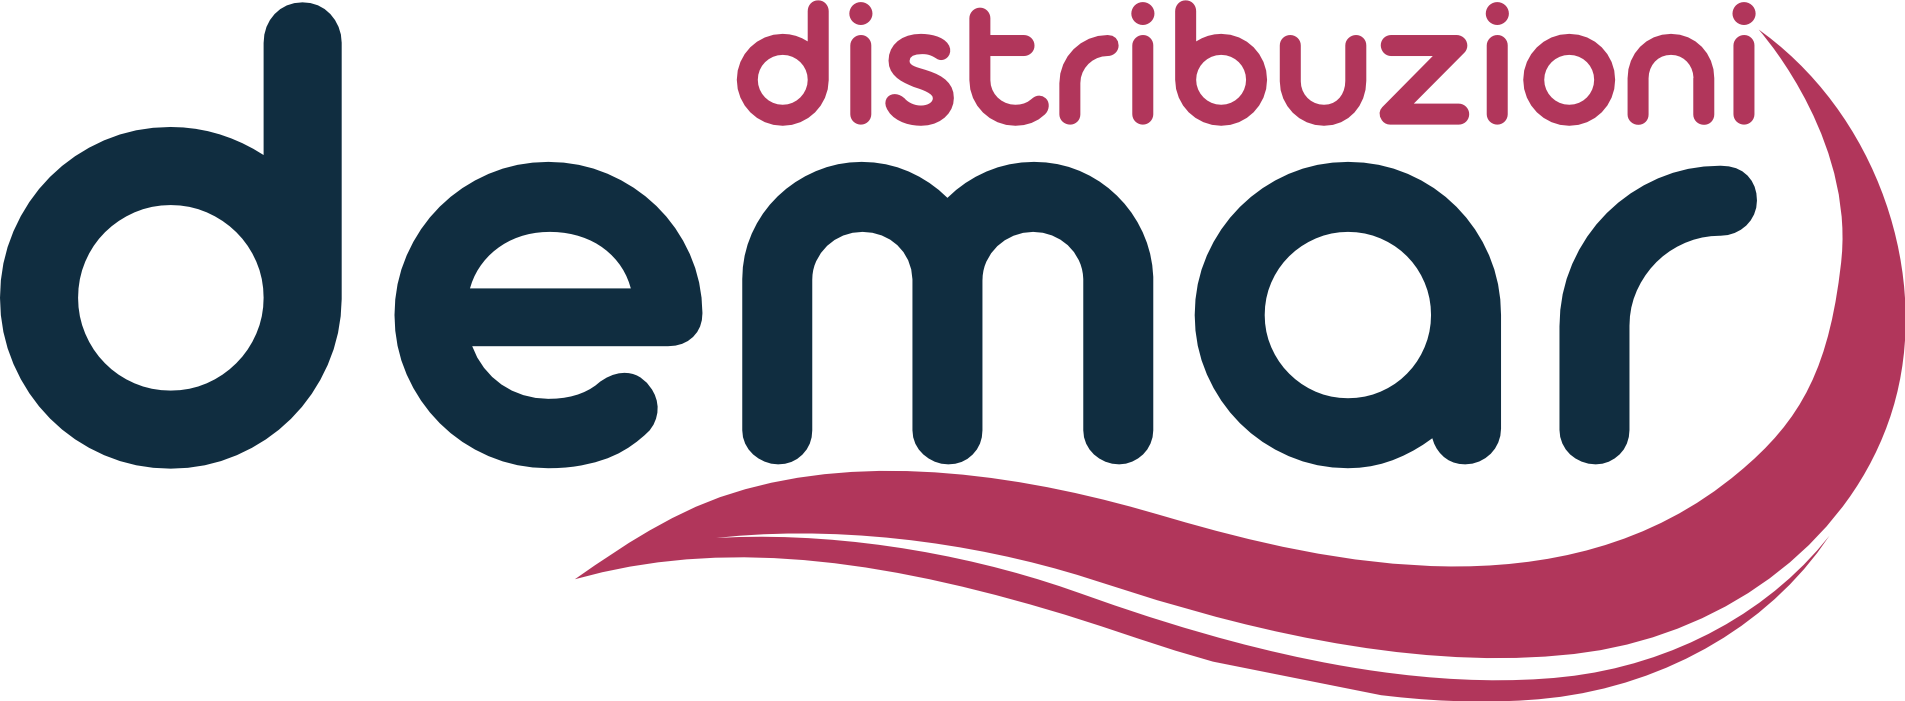 distribuzioni demar- logo site